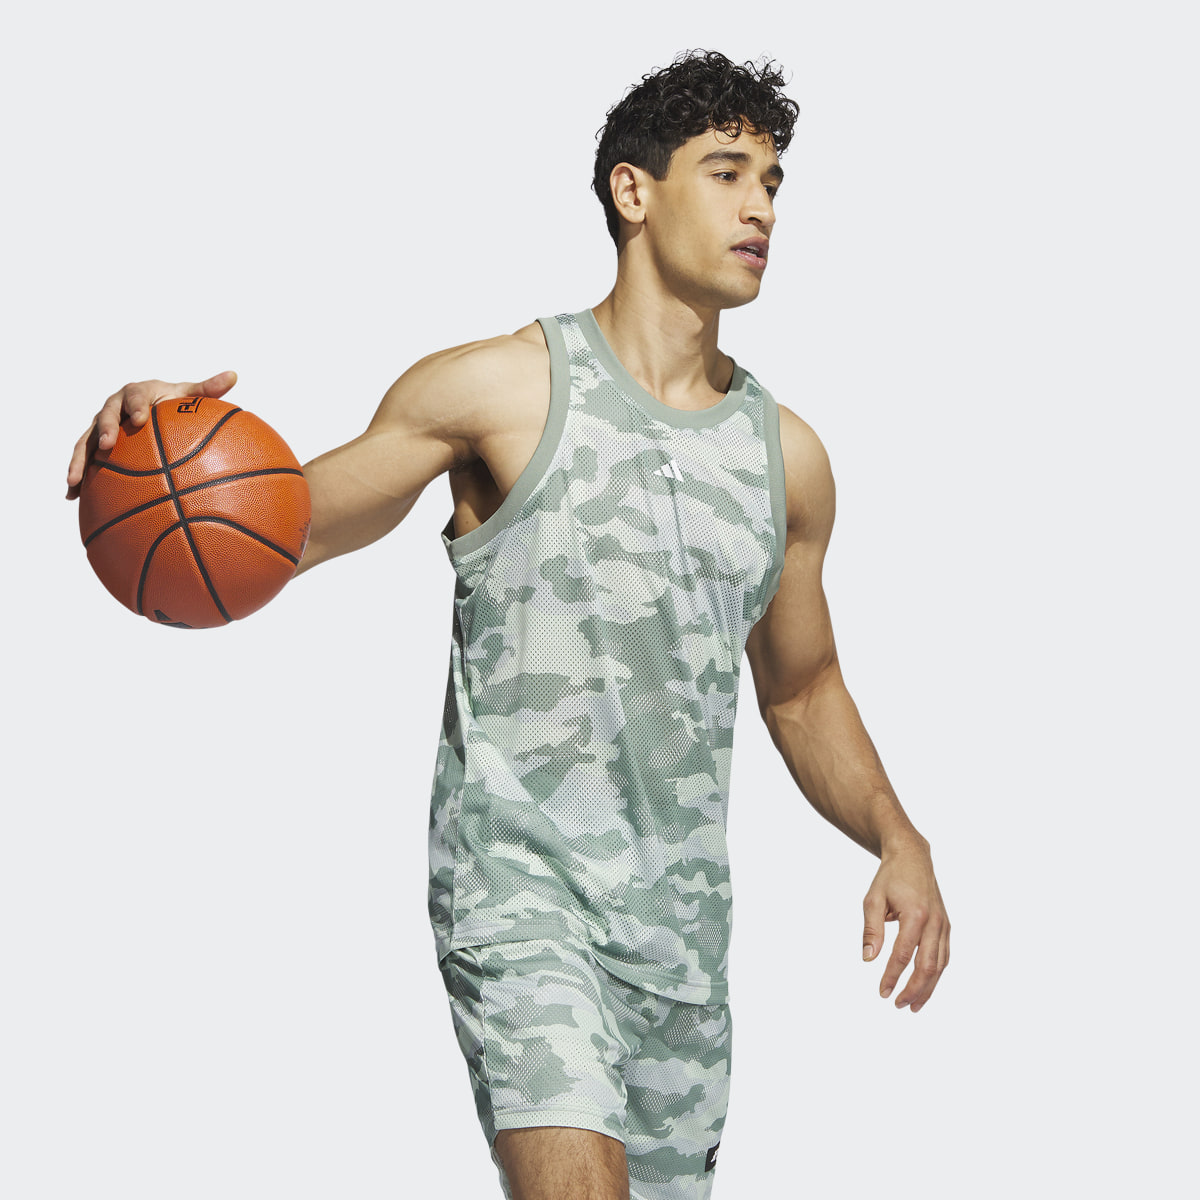 Adidas Basketball Legends Allover Print Tank Top. 4